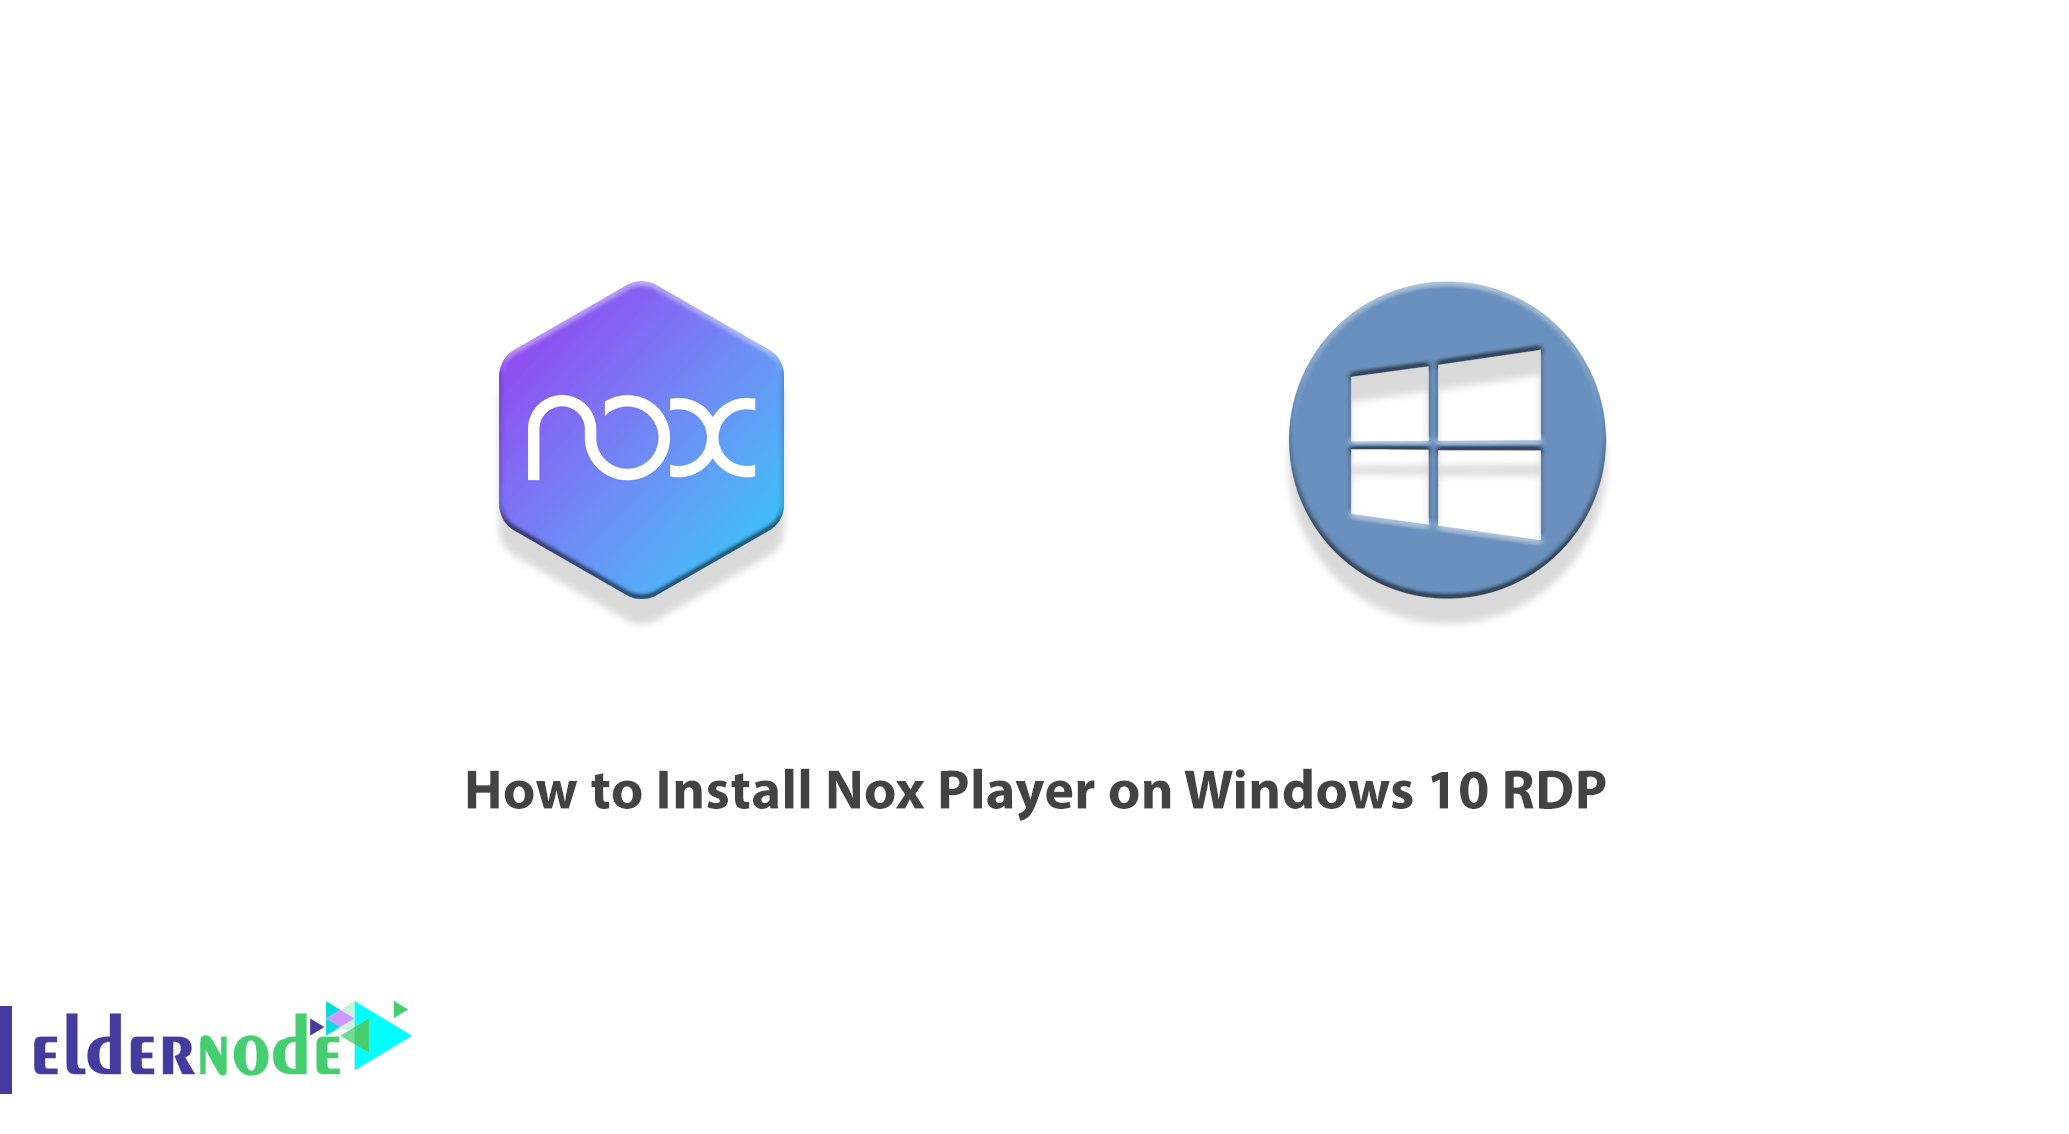 run nox on windows 10 in compatibility mode